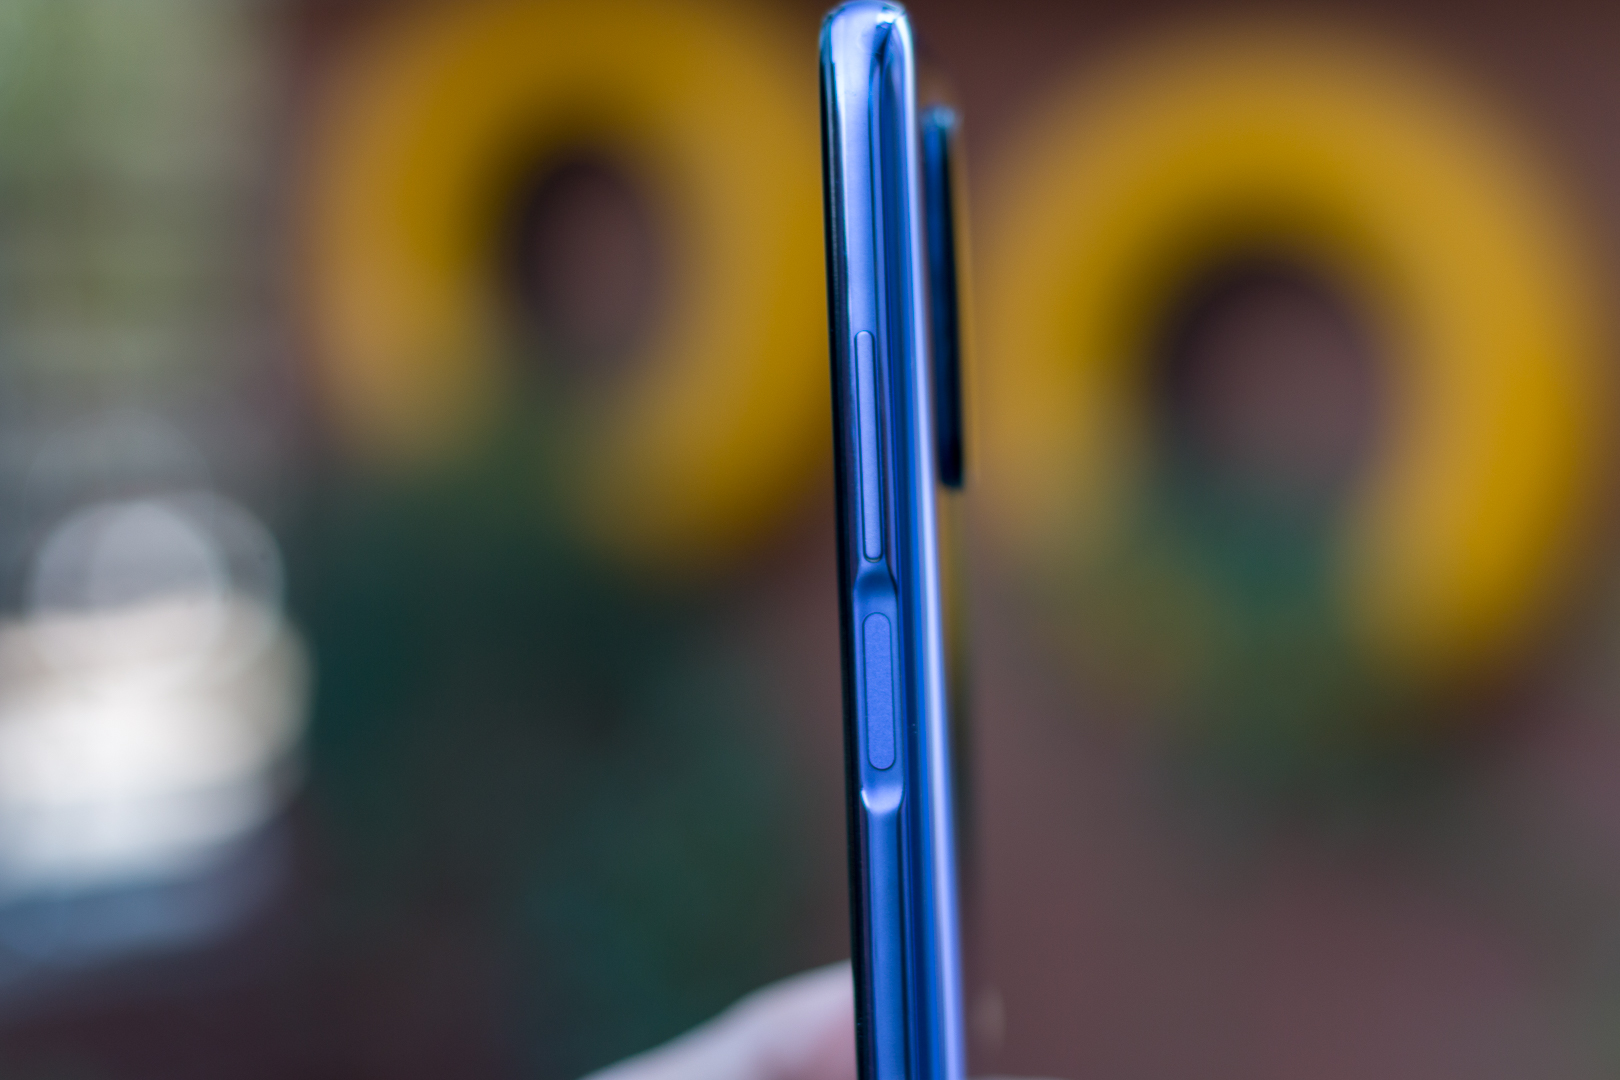 Xiaomi Mi Pad 5 uses a sharp edge design, side fingerprints